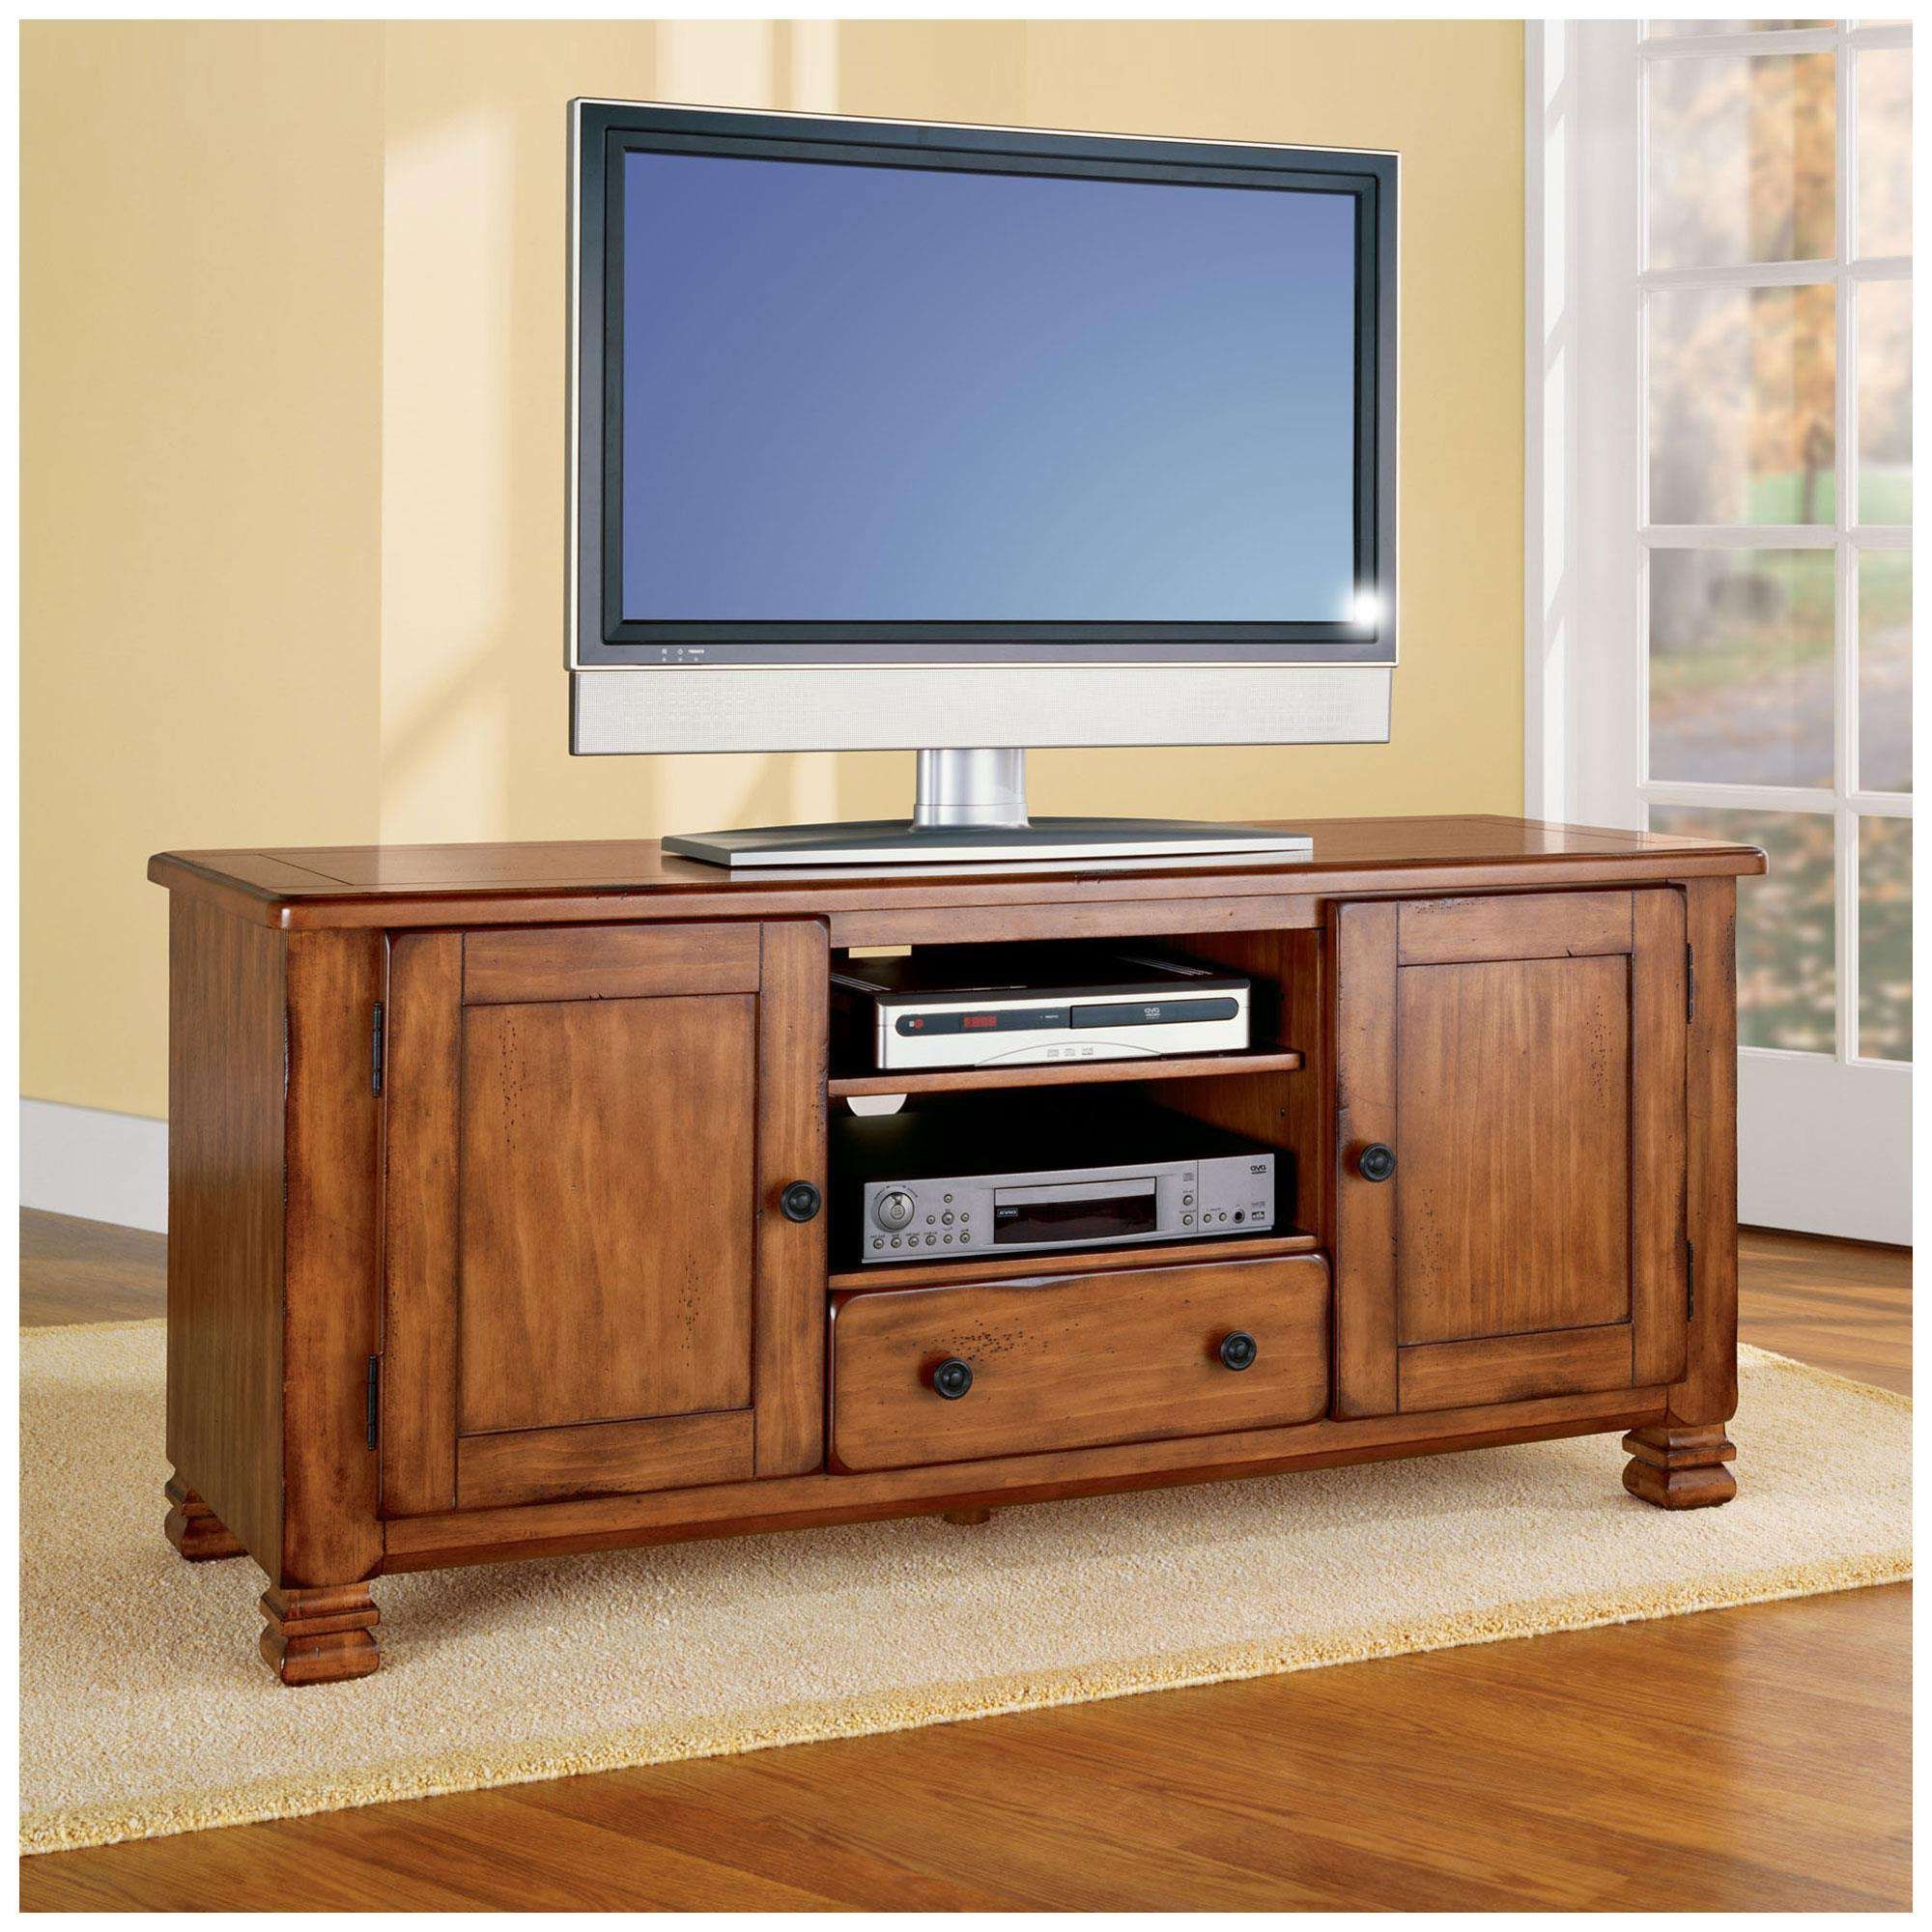 Oak Tv Stands For Flat Screen Within Oak Tv Stands For Flat Screen (Gallery 2 of 15)